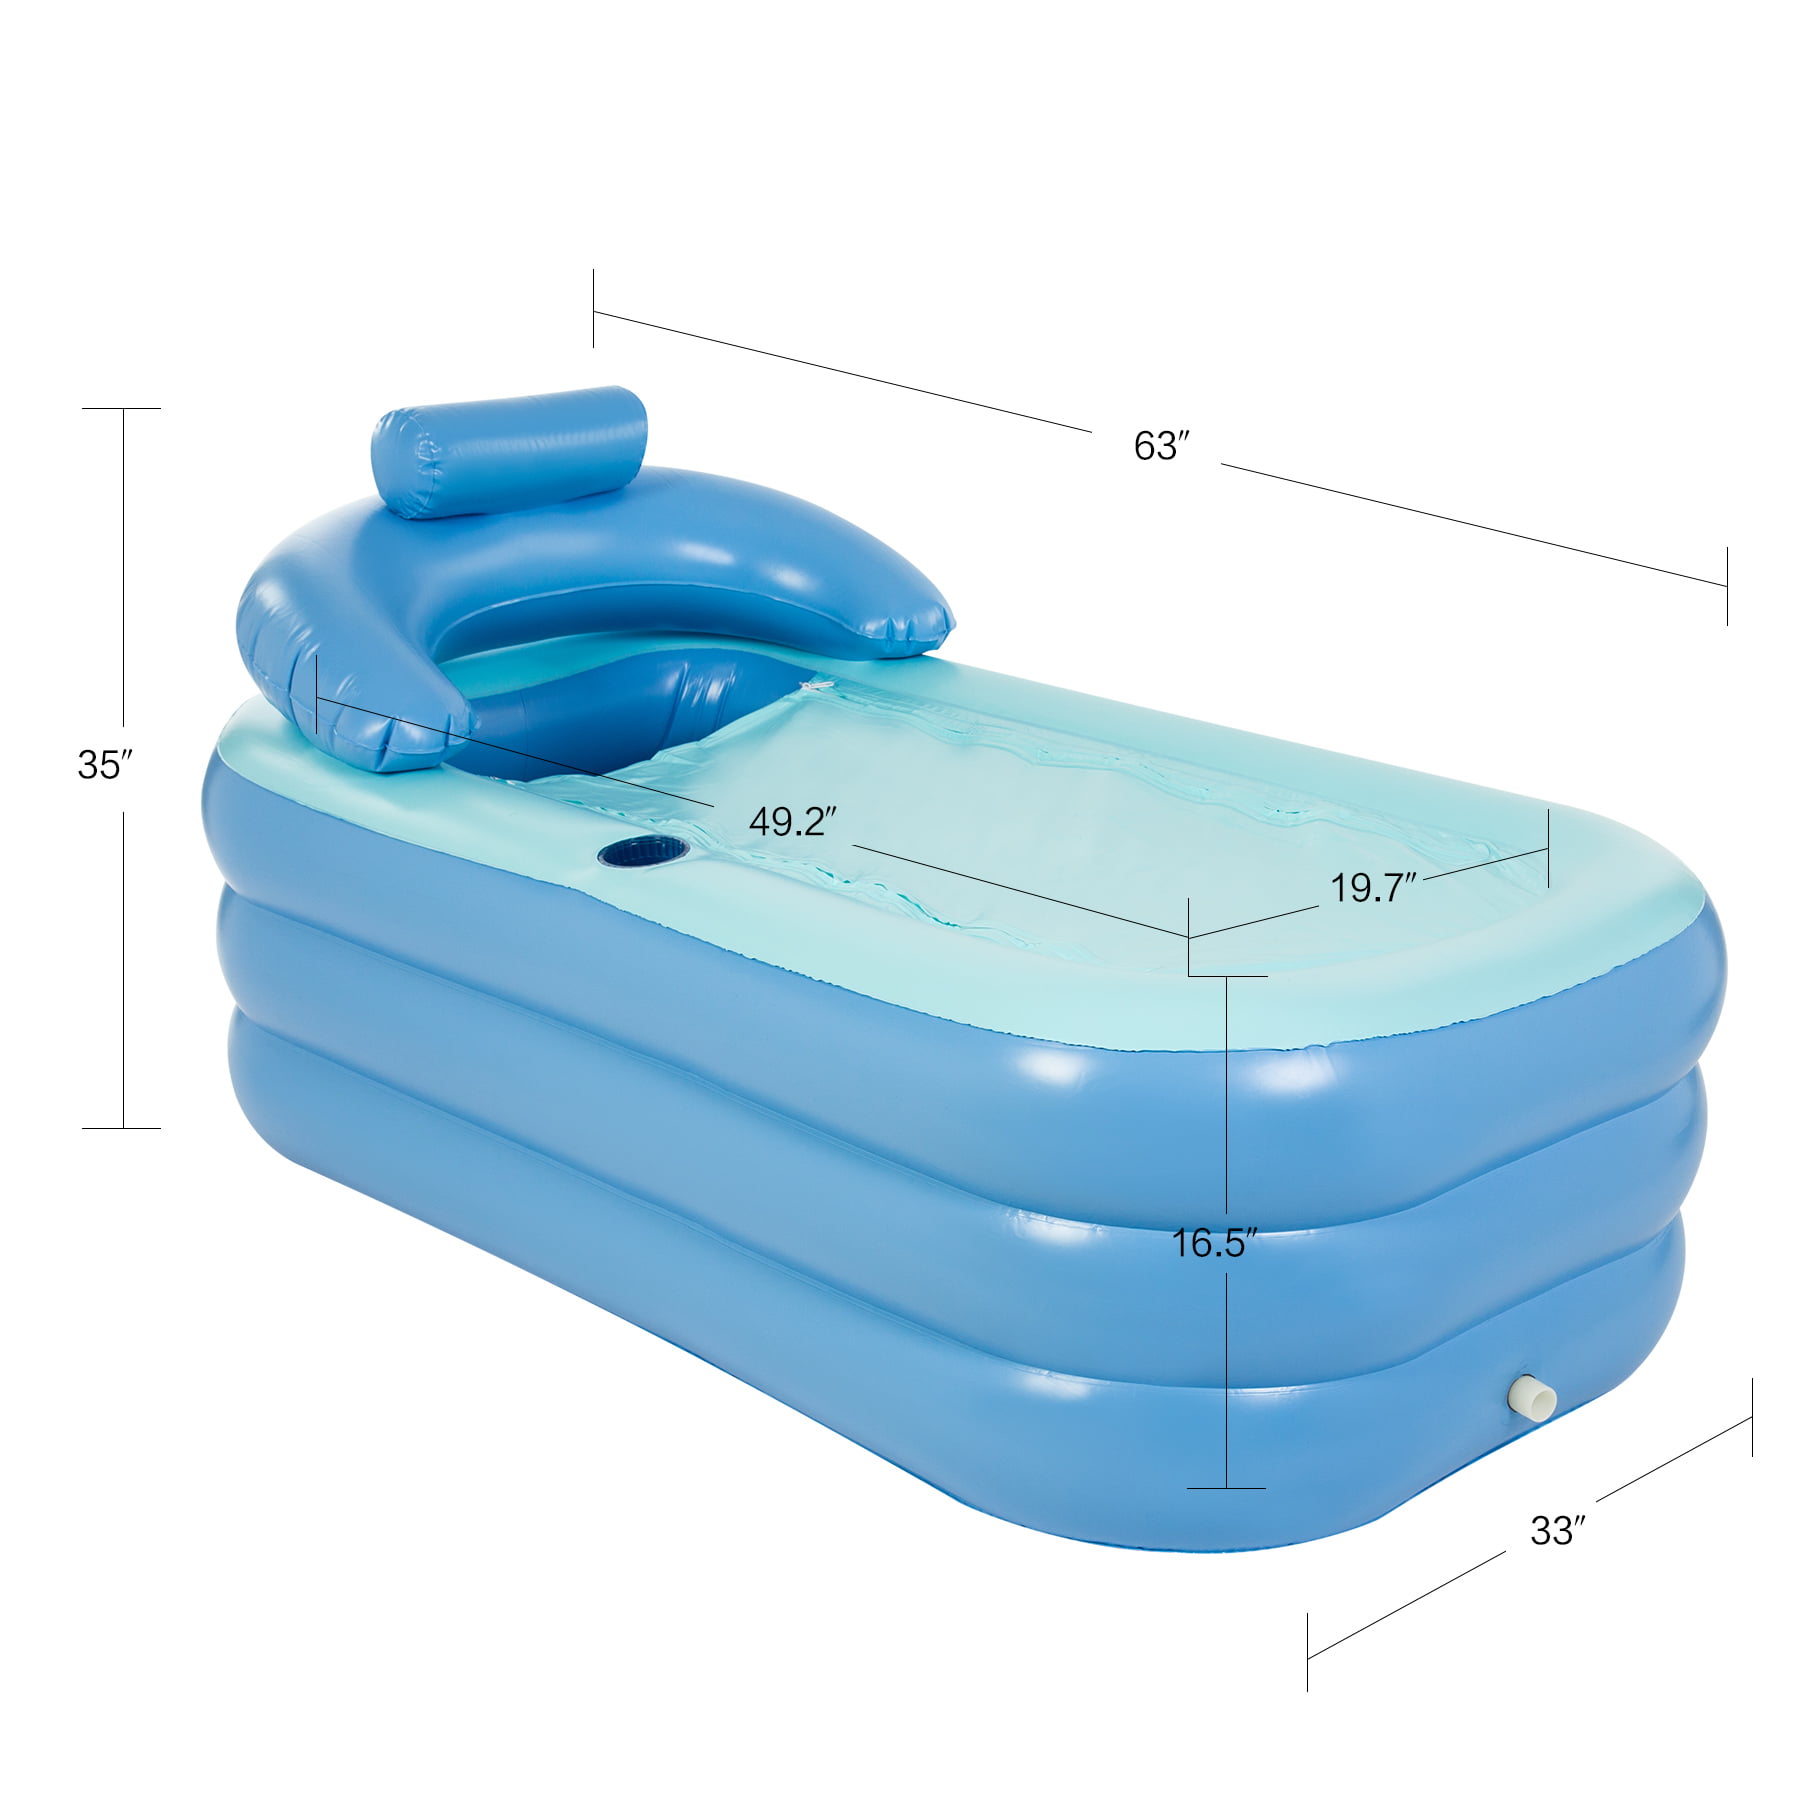 Details about   160cm Blow Up Adult PVC Portable Spa Warm Bathtub Inflatable Bath Tub USA Stock 